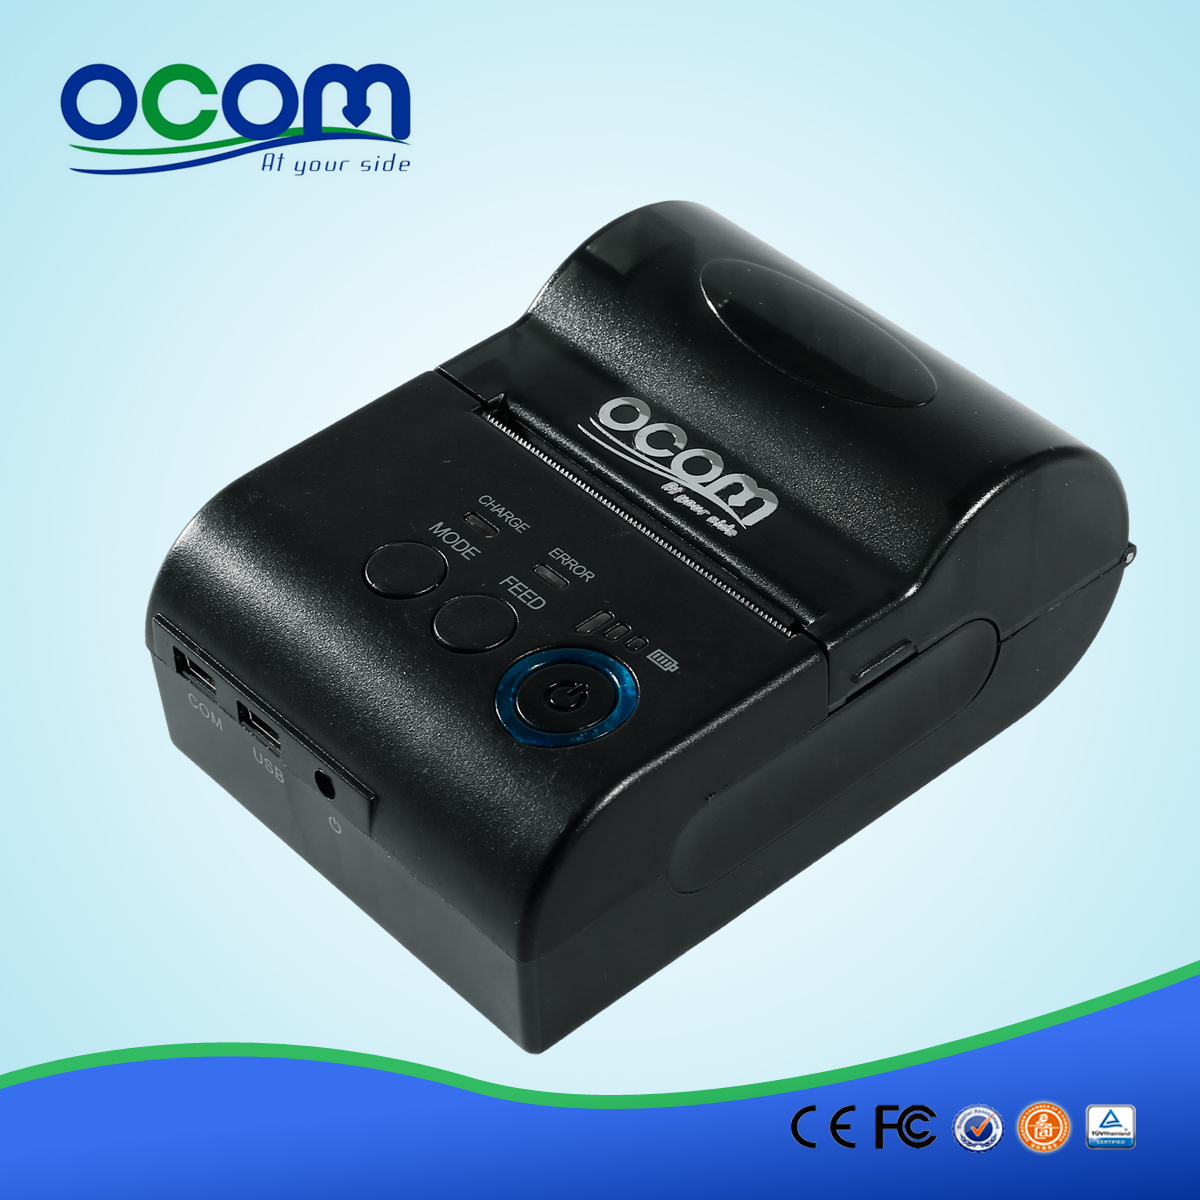 OCPP-M03: impressora pos barato, impressora pos impressora térmica android térmica